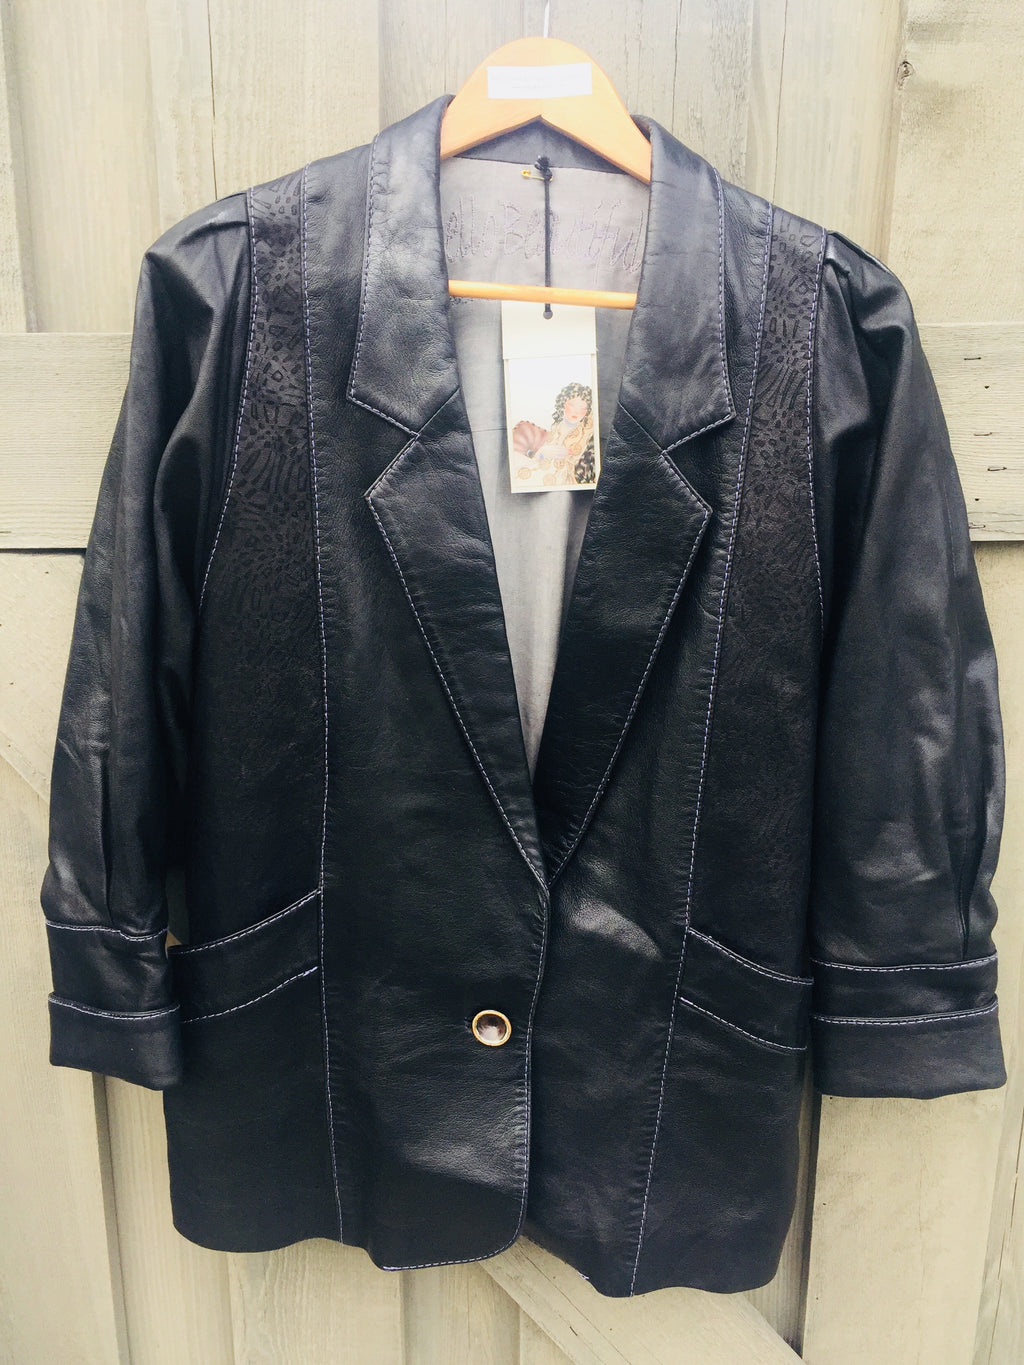 Jacket: Elegant Black Leather Blazer